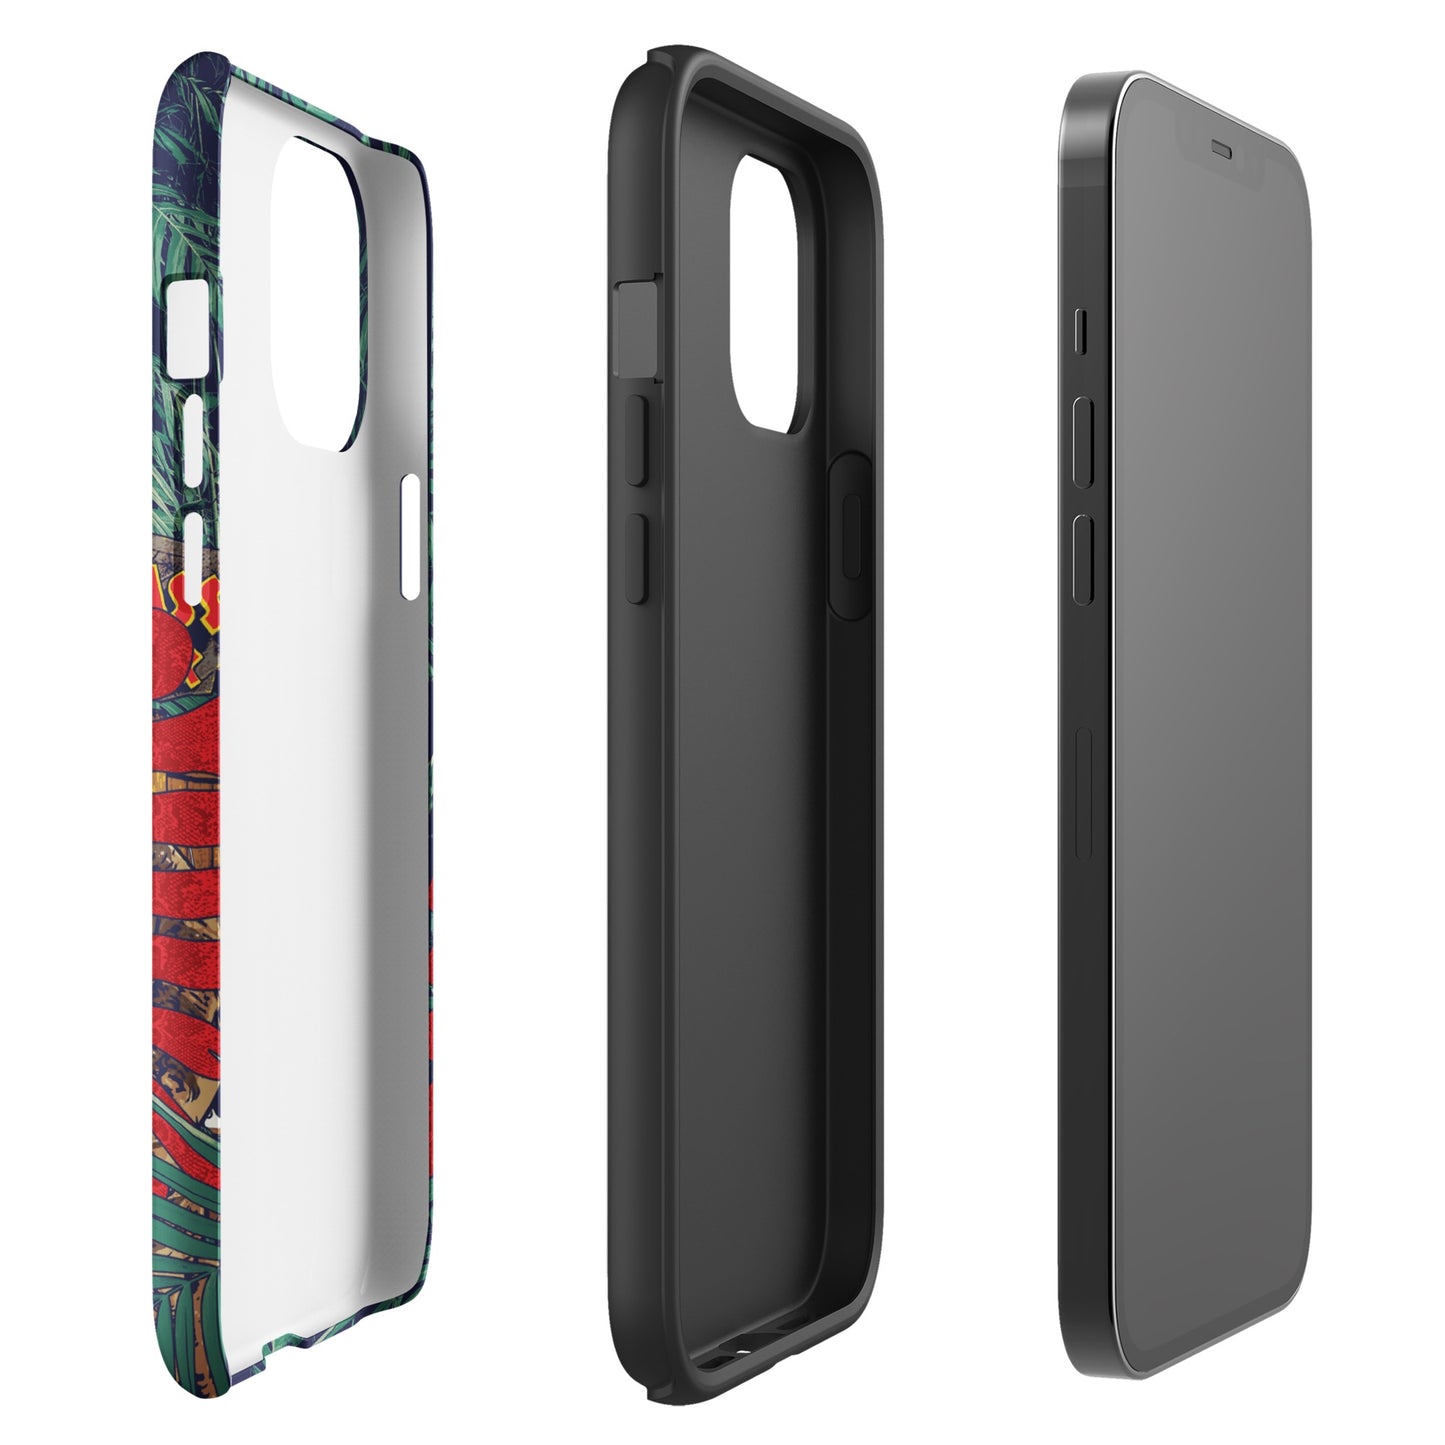 Jurassic Park Jungle Collage Tough Phone Case - iPhone